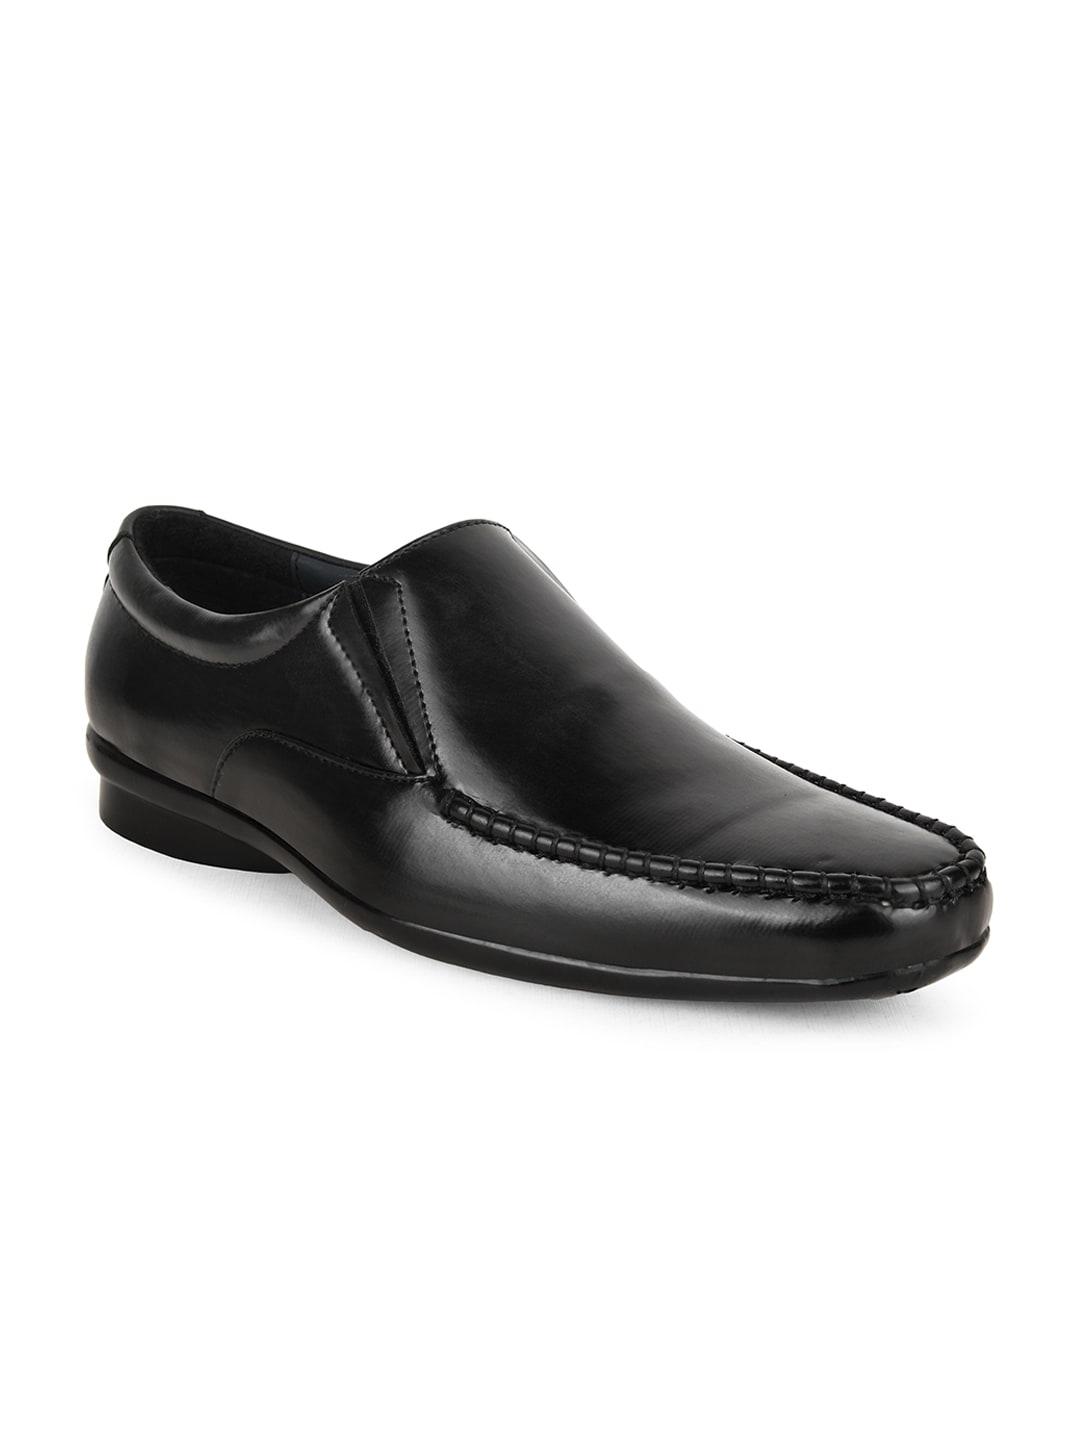 paragon-men-round-toe-formal-slip-on-shoes